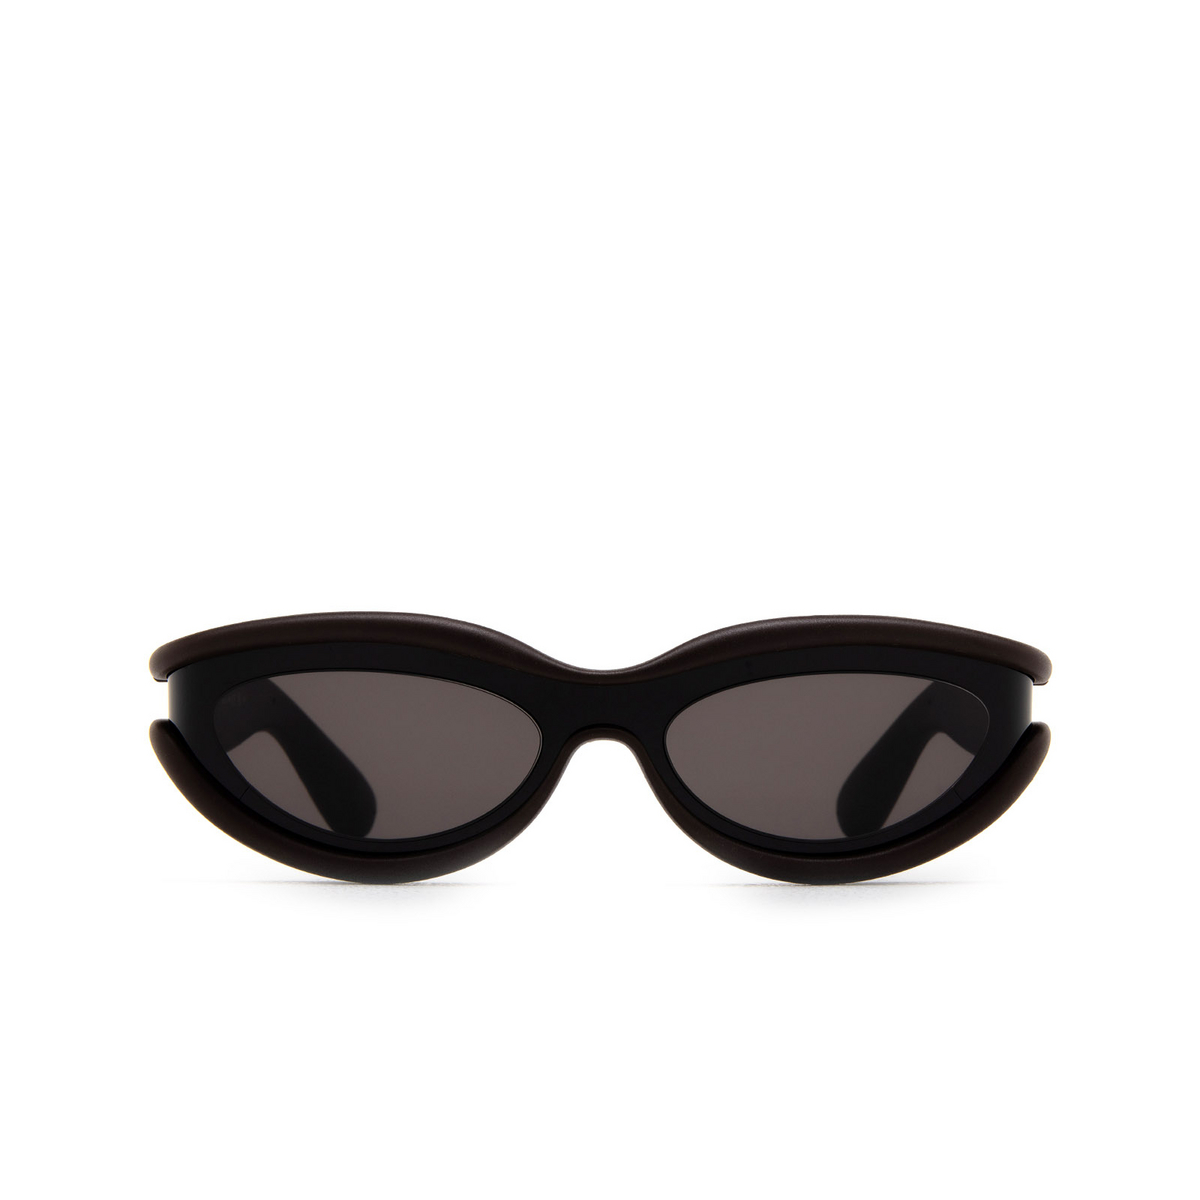 Bottega Veneta Hem Sunglasses 002 Black - front view